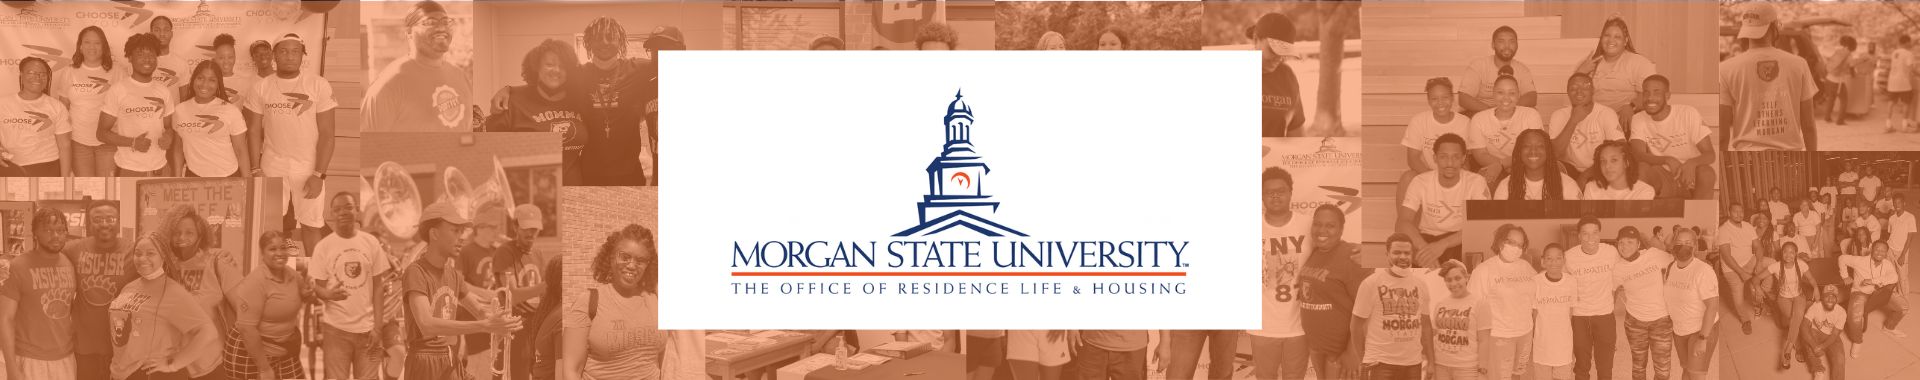 Website banner for the Office of Residence Life & Housing